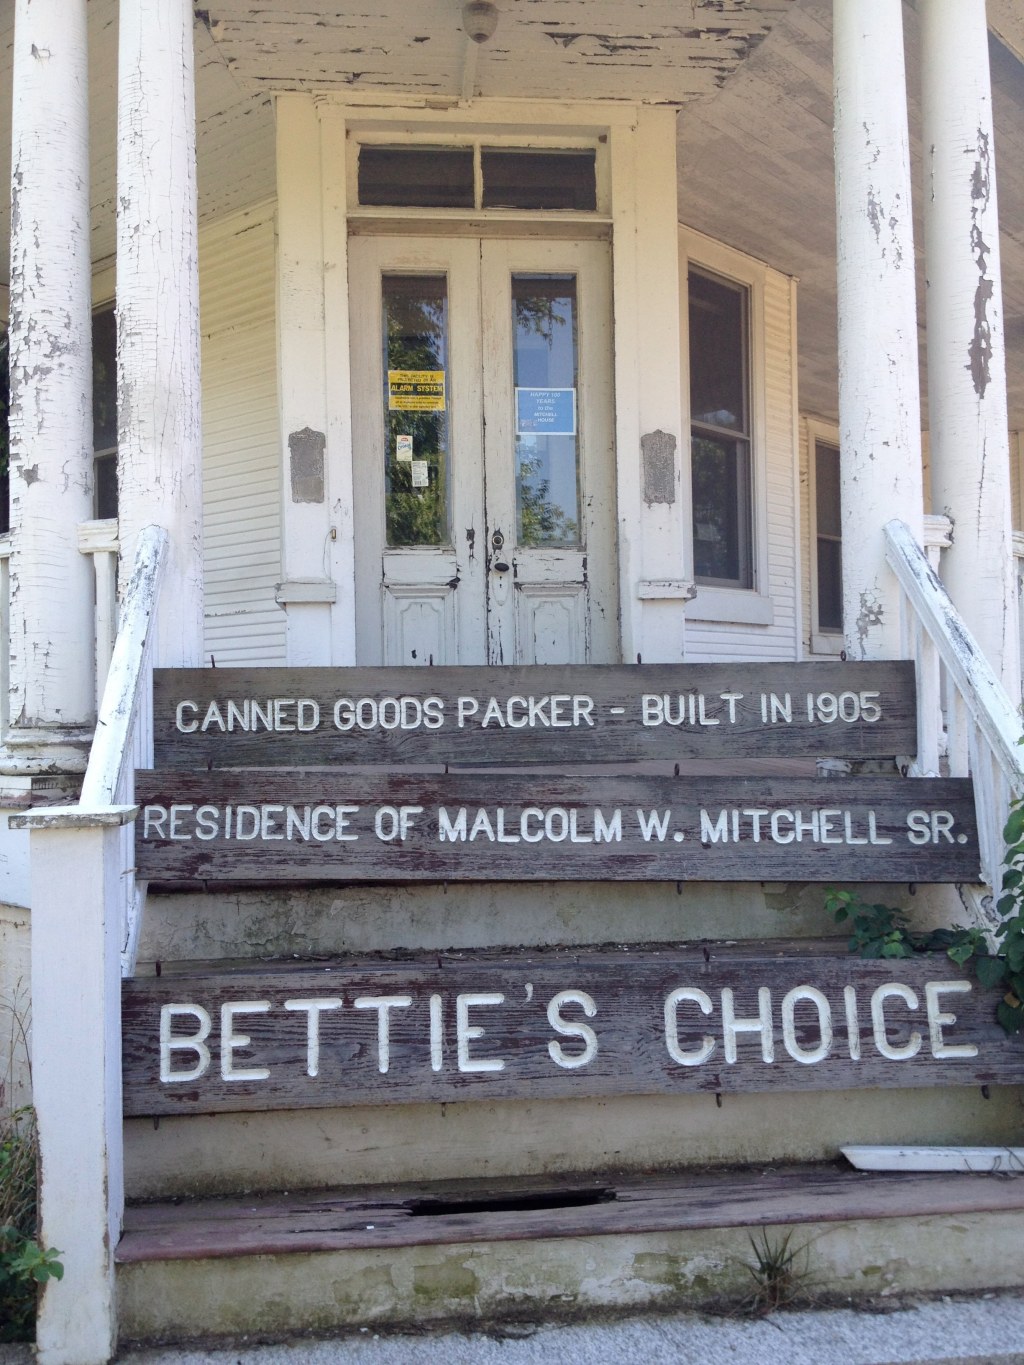 Bettie’s Choice: The Short Lane House